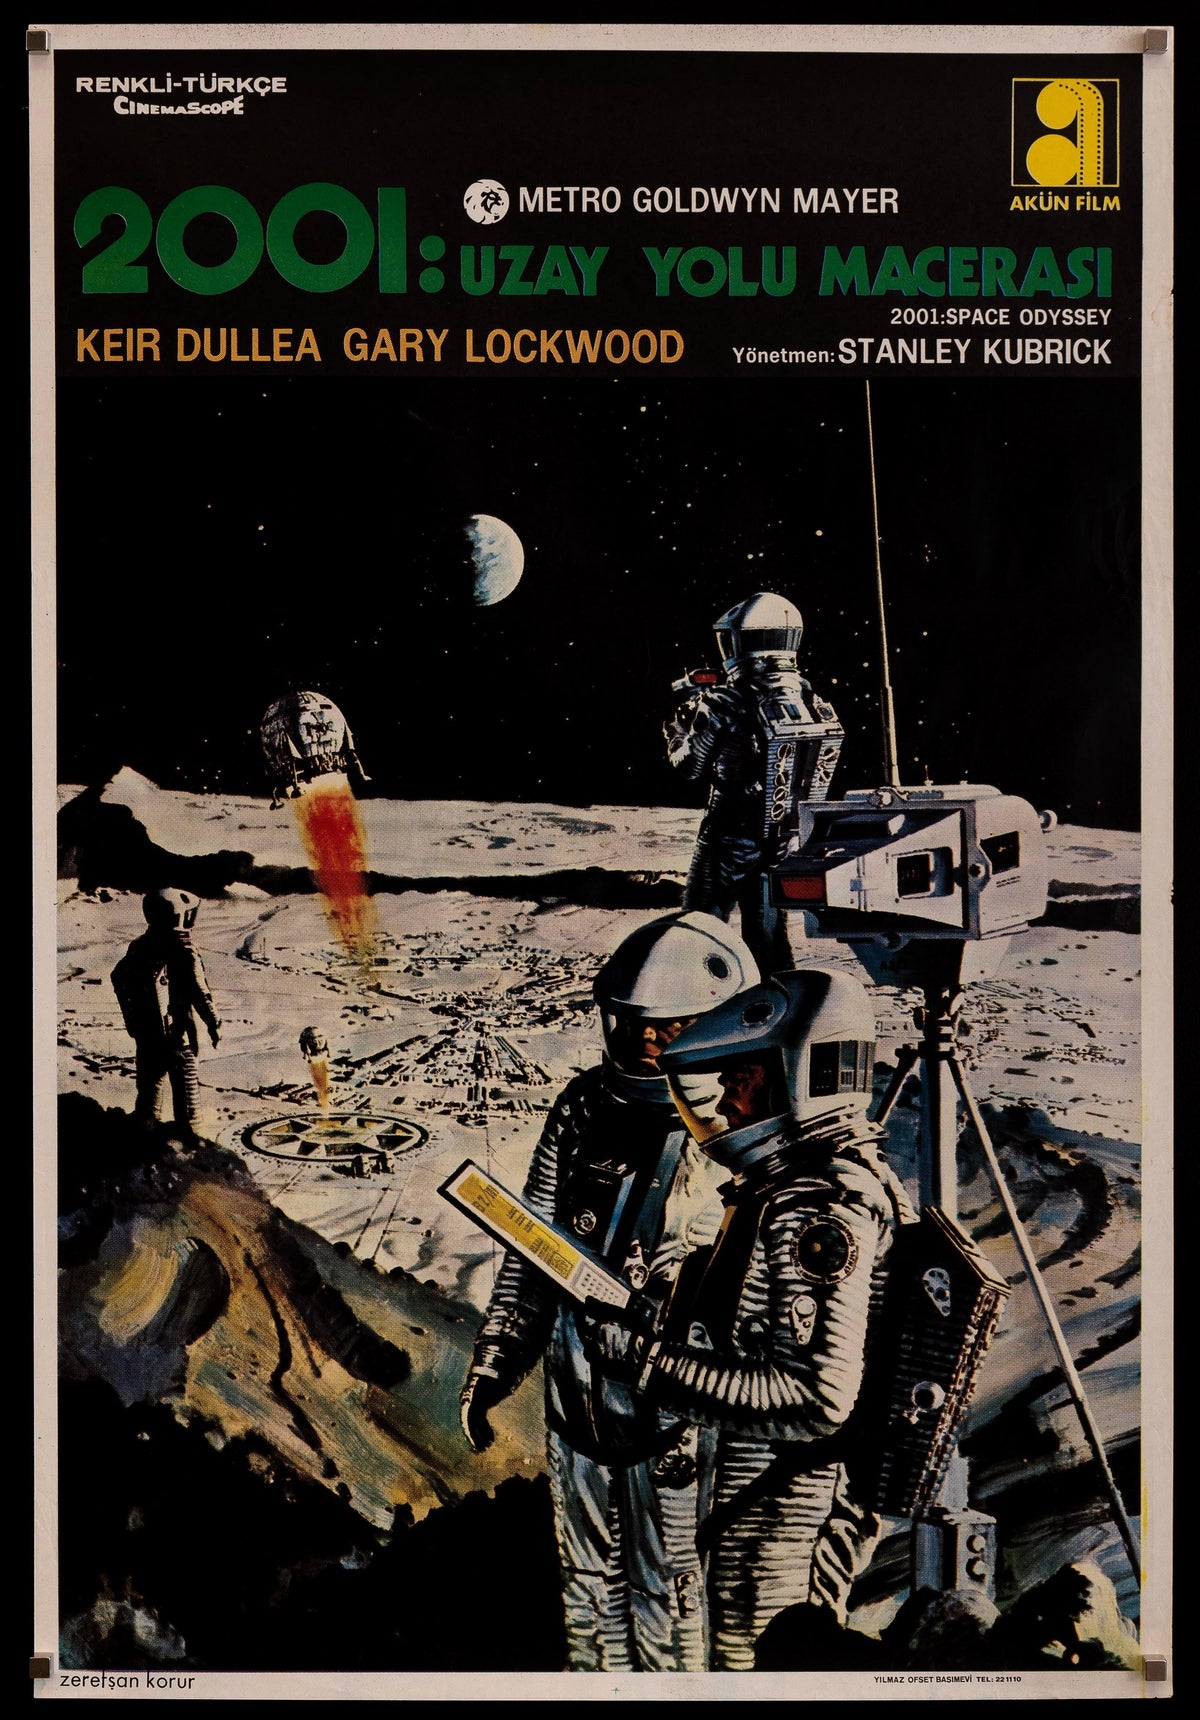 2001 A Space Odyssey 1 Sheet (27x41) Original Vintage Movie Poster